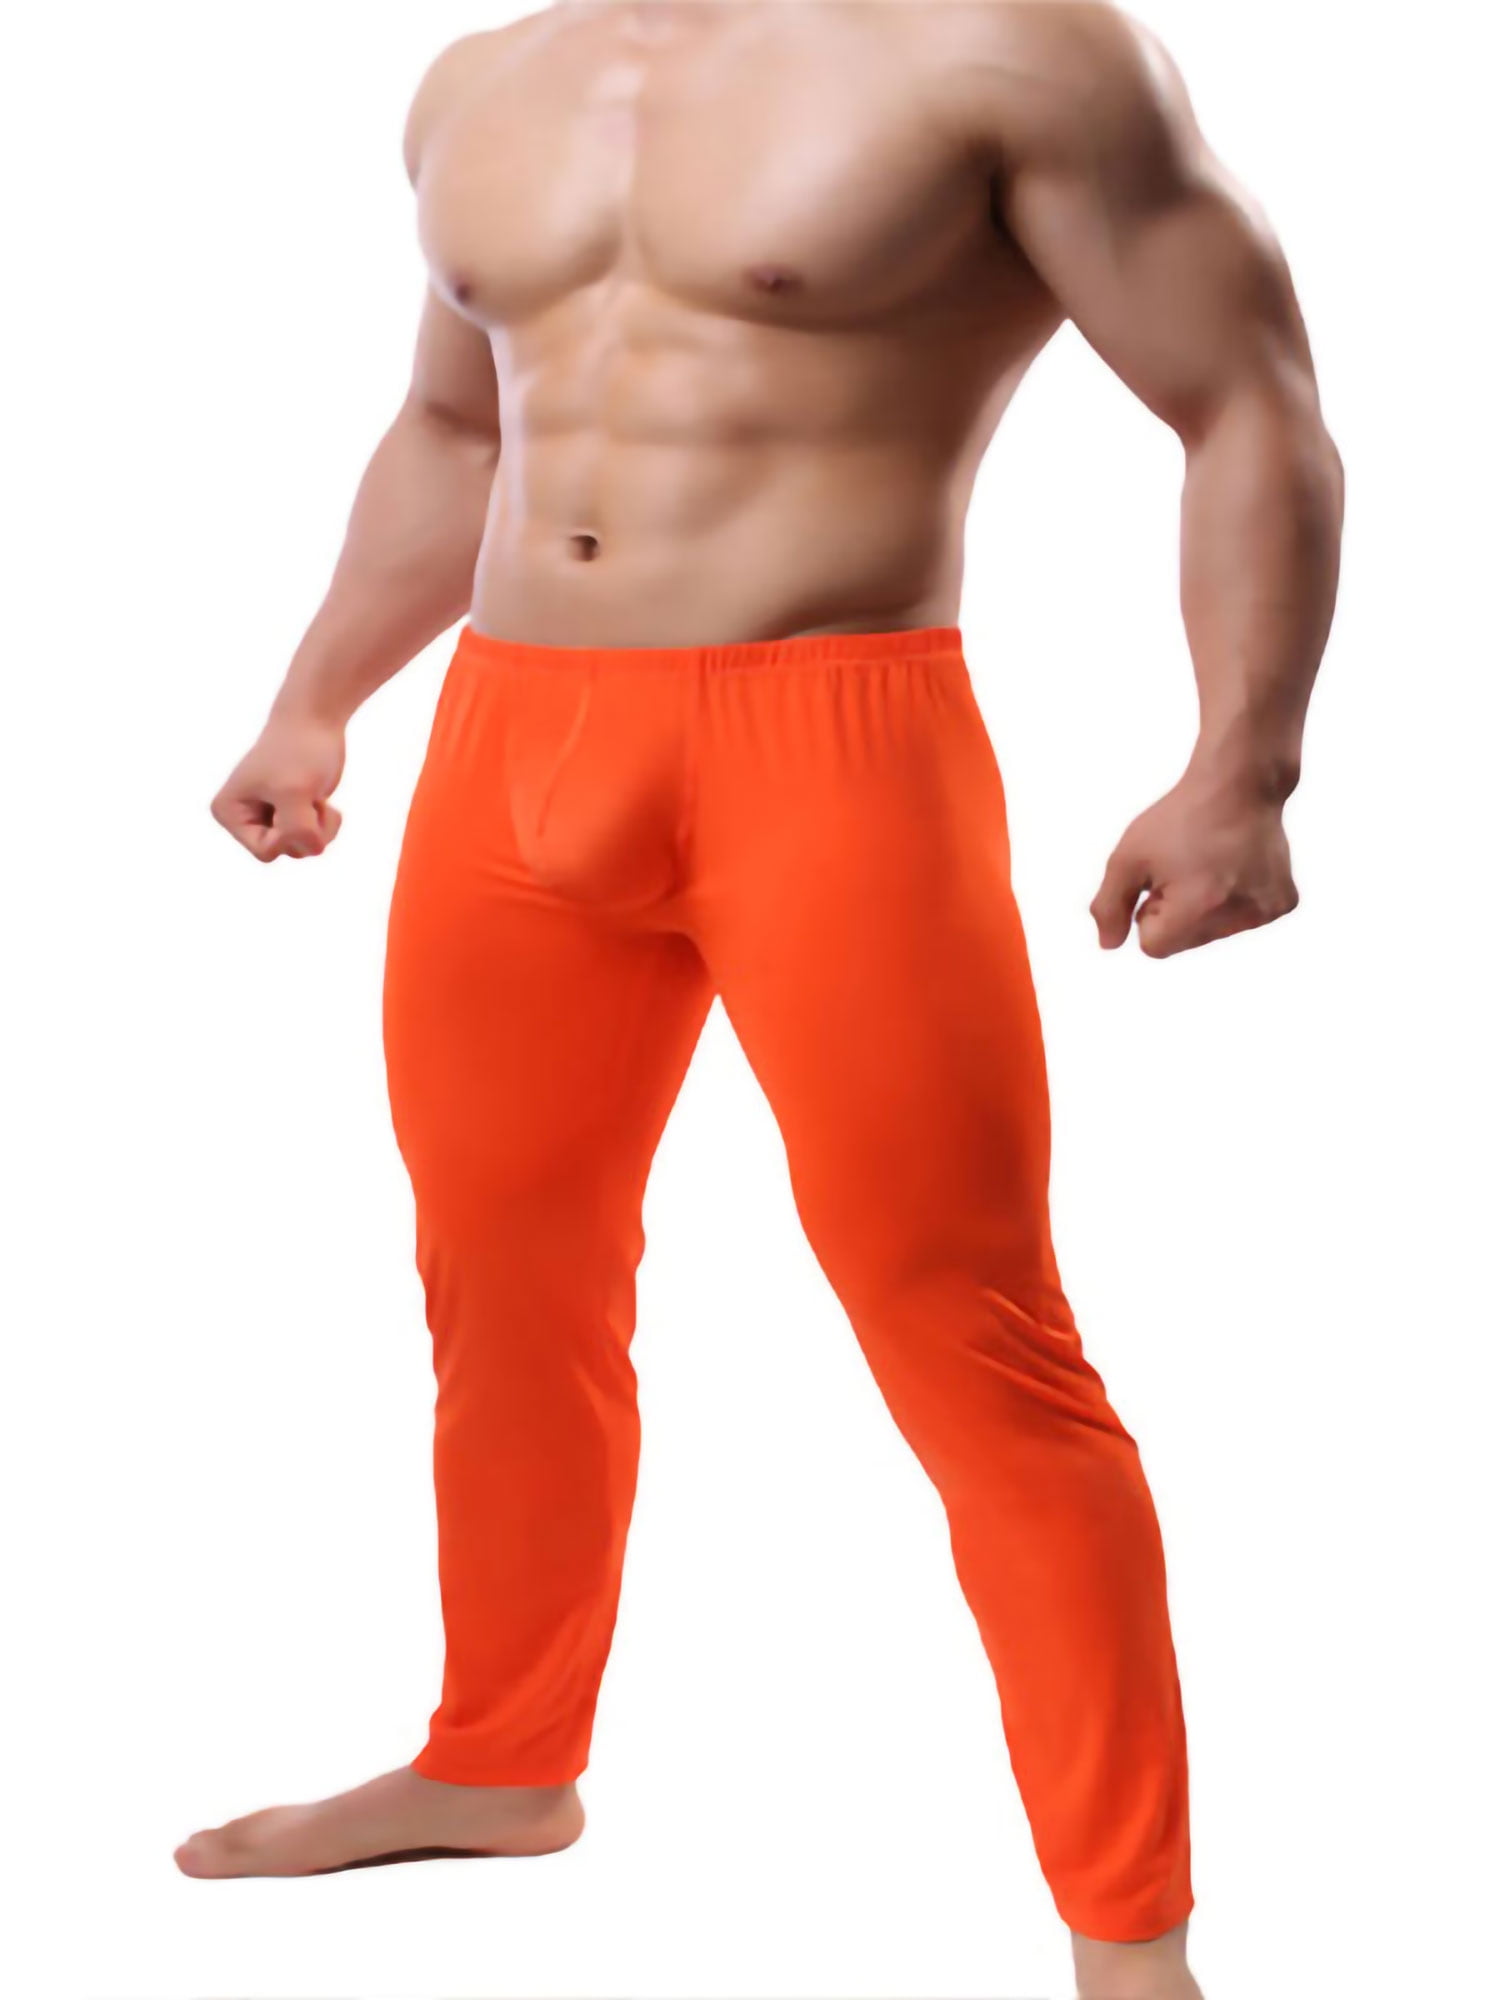 US Mens Bulge Pants Pants Sports Yoga Gym Long John Trousers Legging Underwear